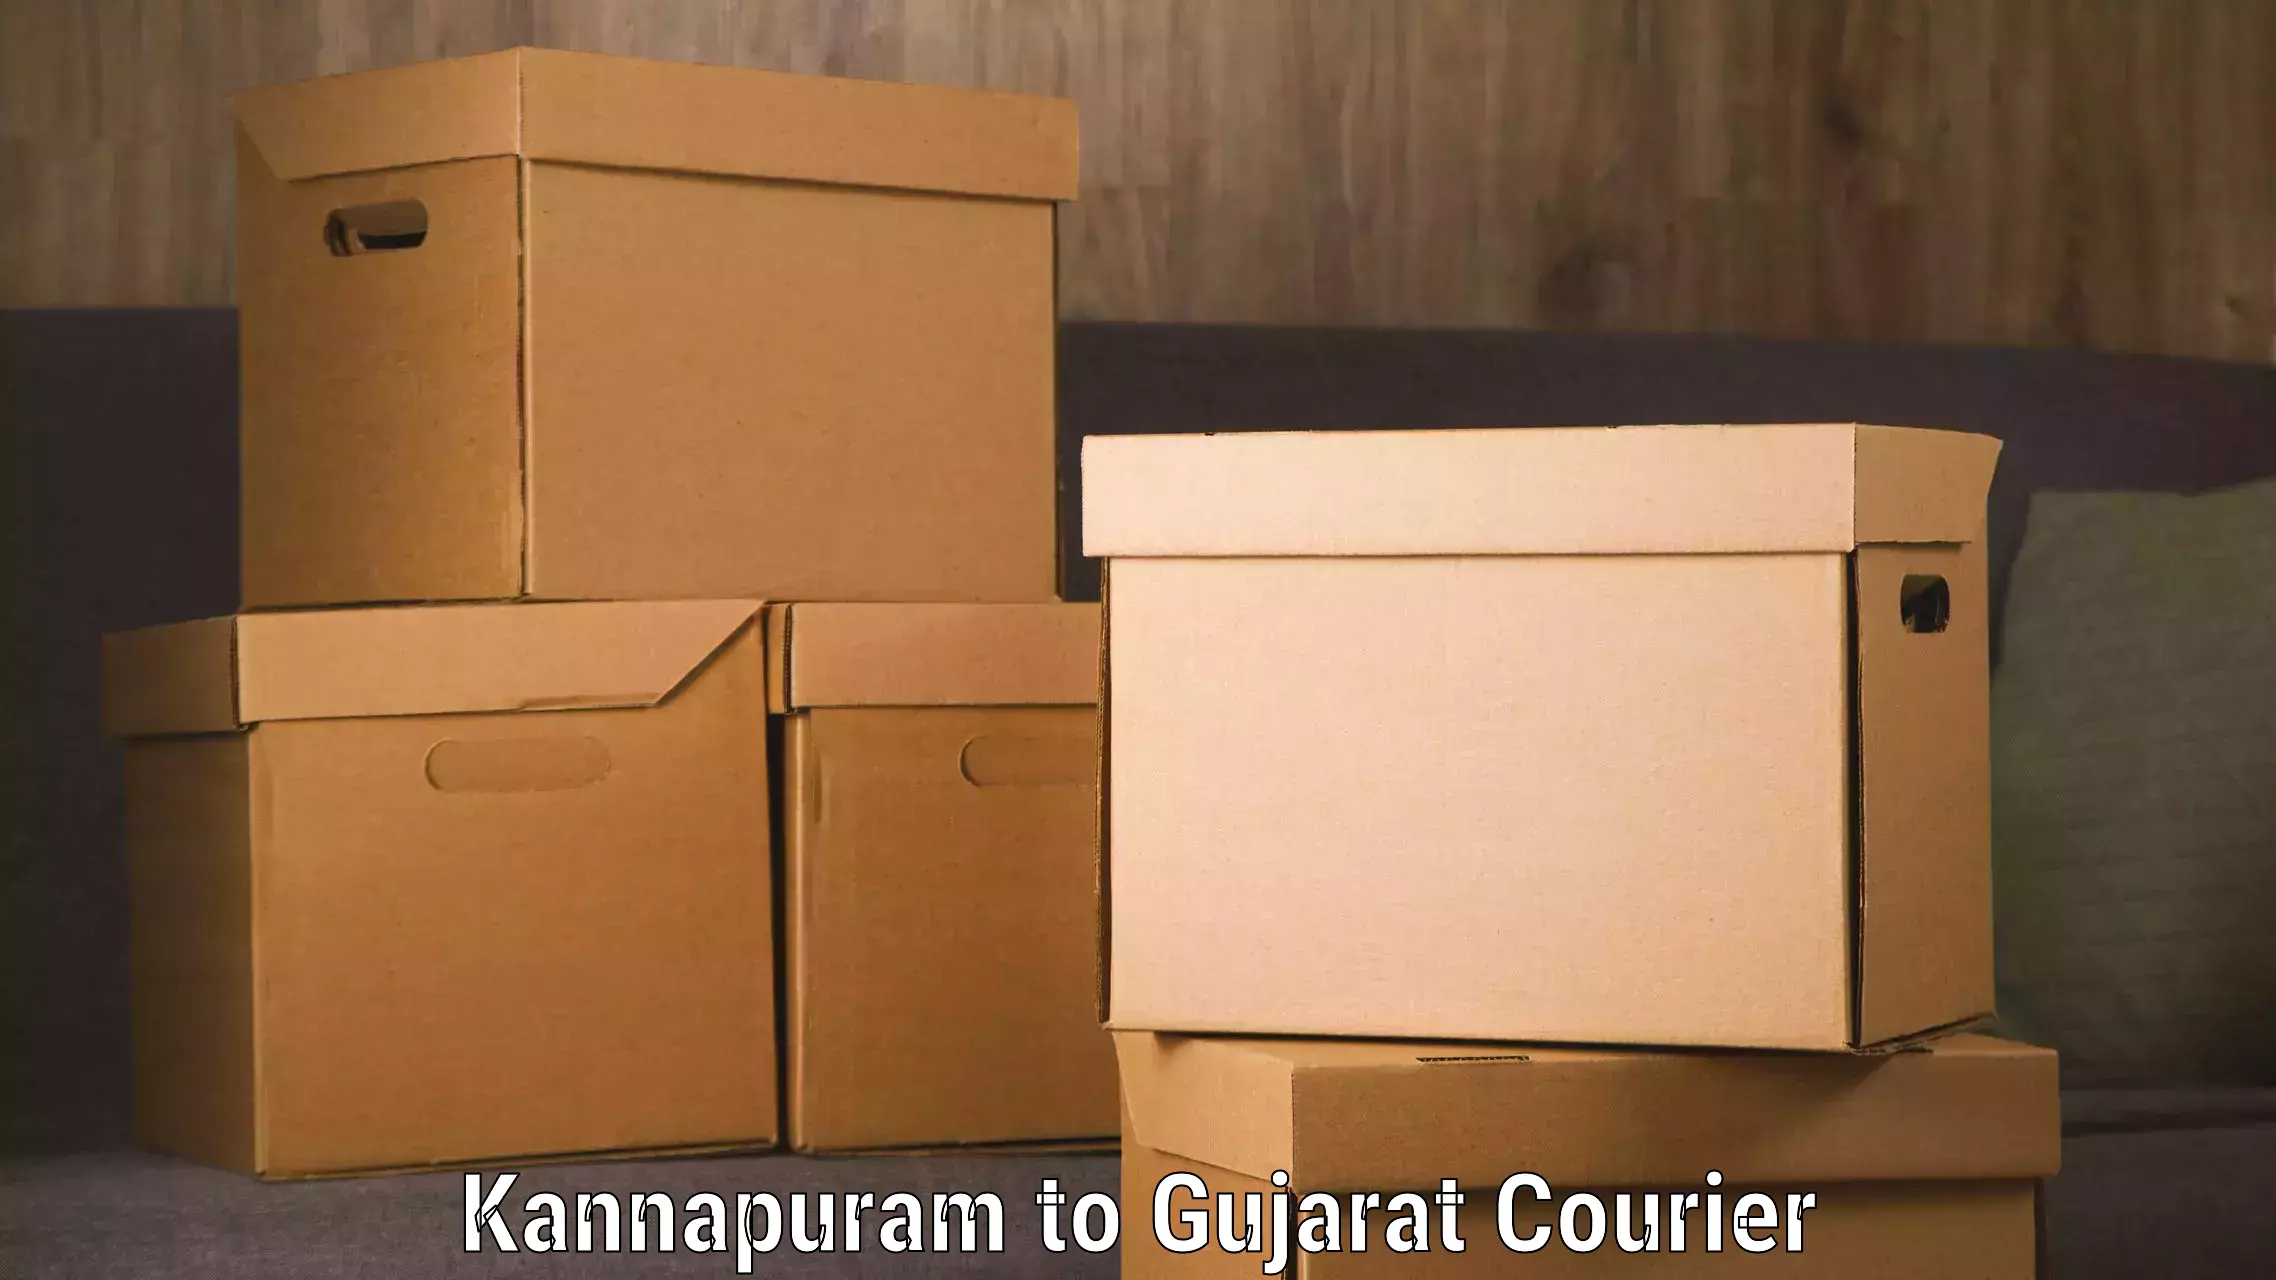 Urgent courier needs Kannapuram to Gujarat